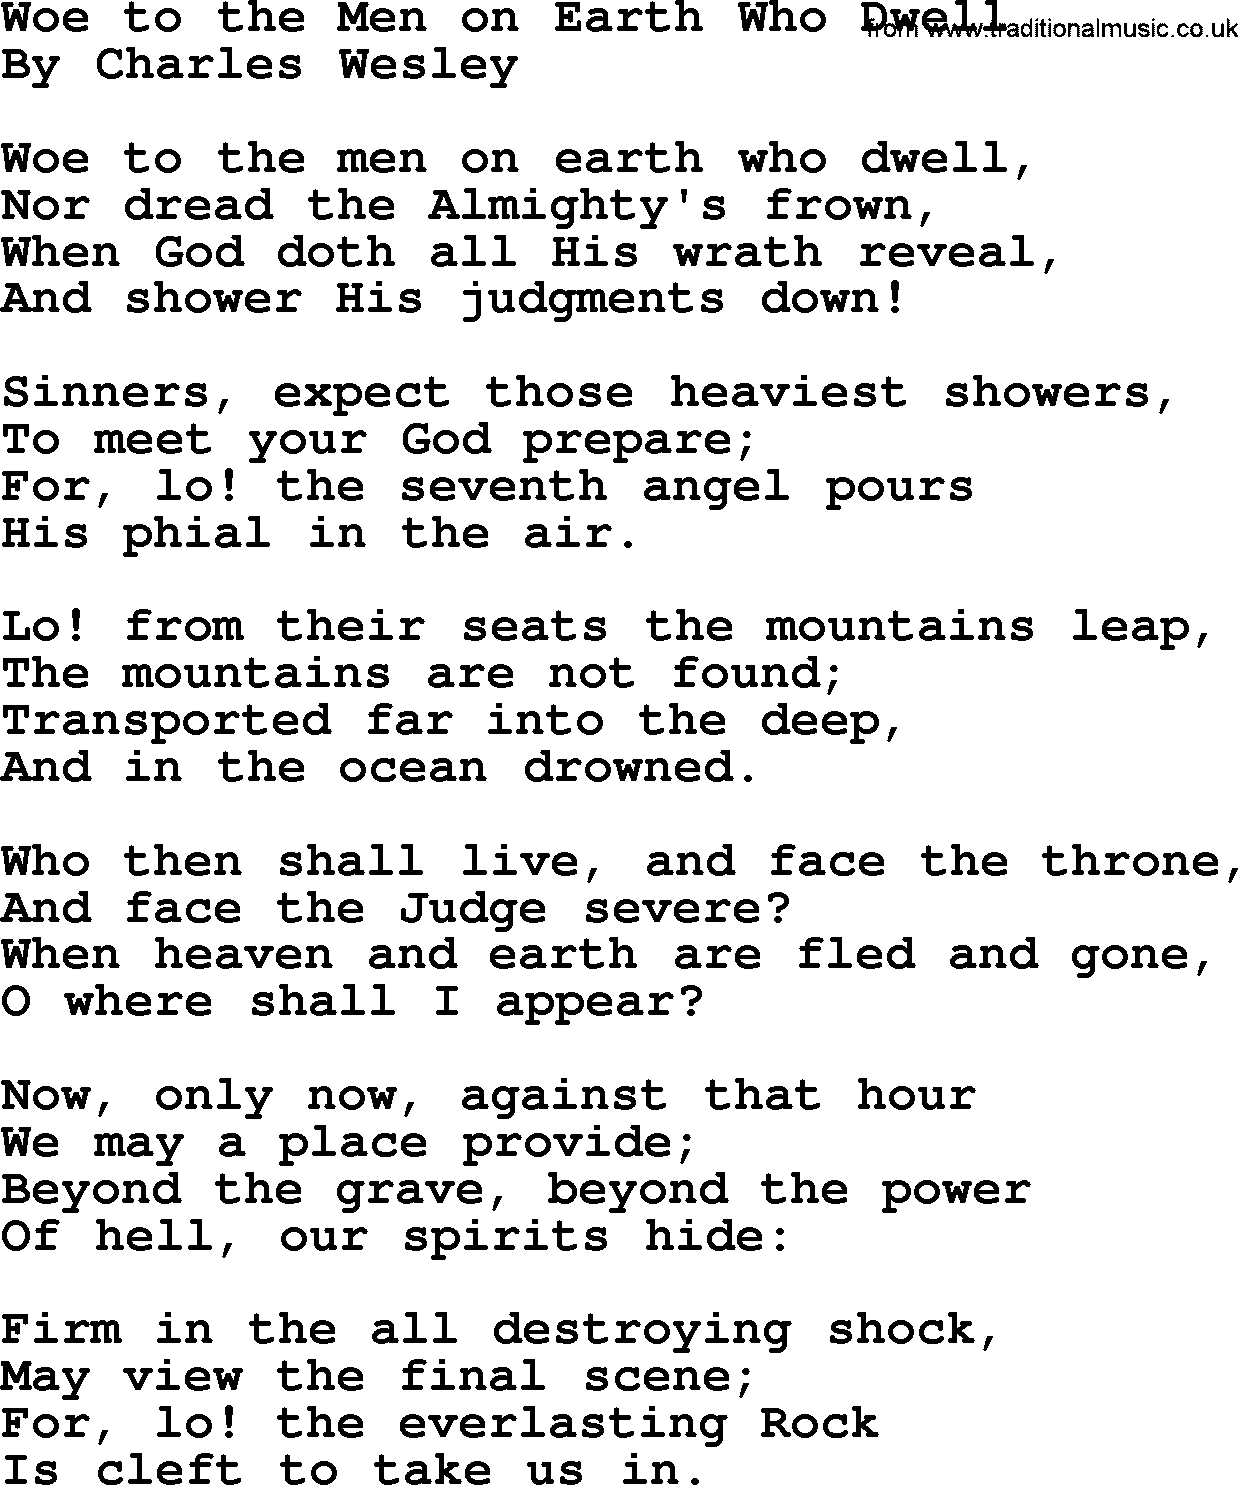 Charles Wesley hymn: Woe To The Men On Earth Who Dwell, lyrics